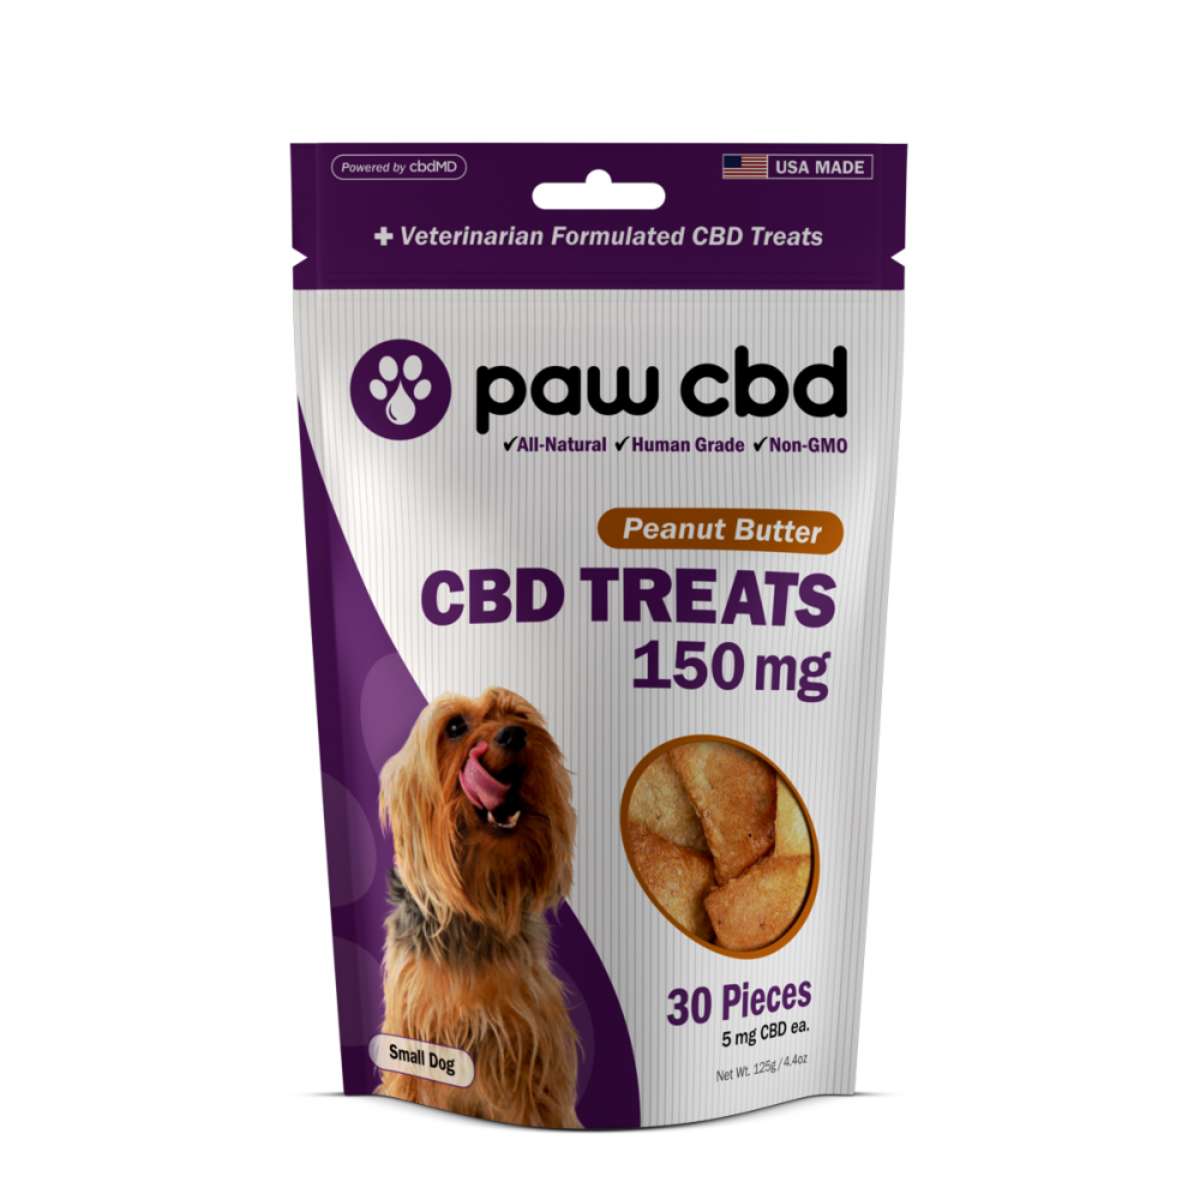 cbdMD Pet CBD Oil Treats for Dogs